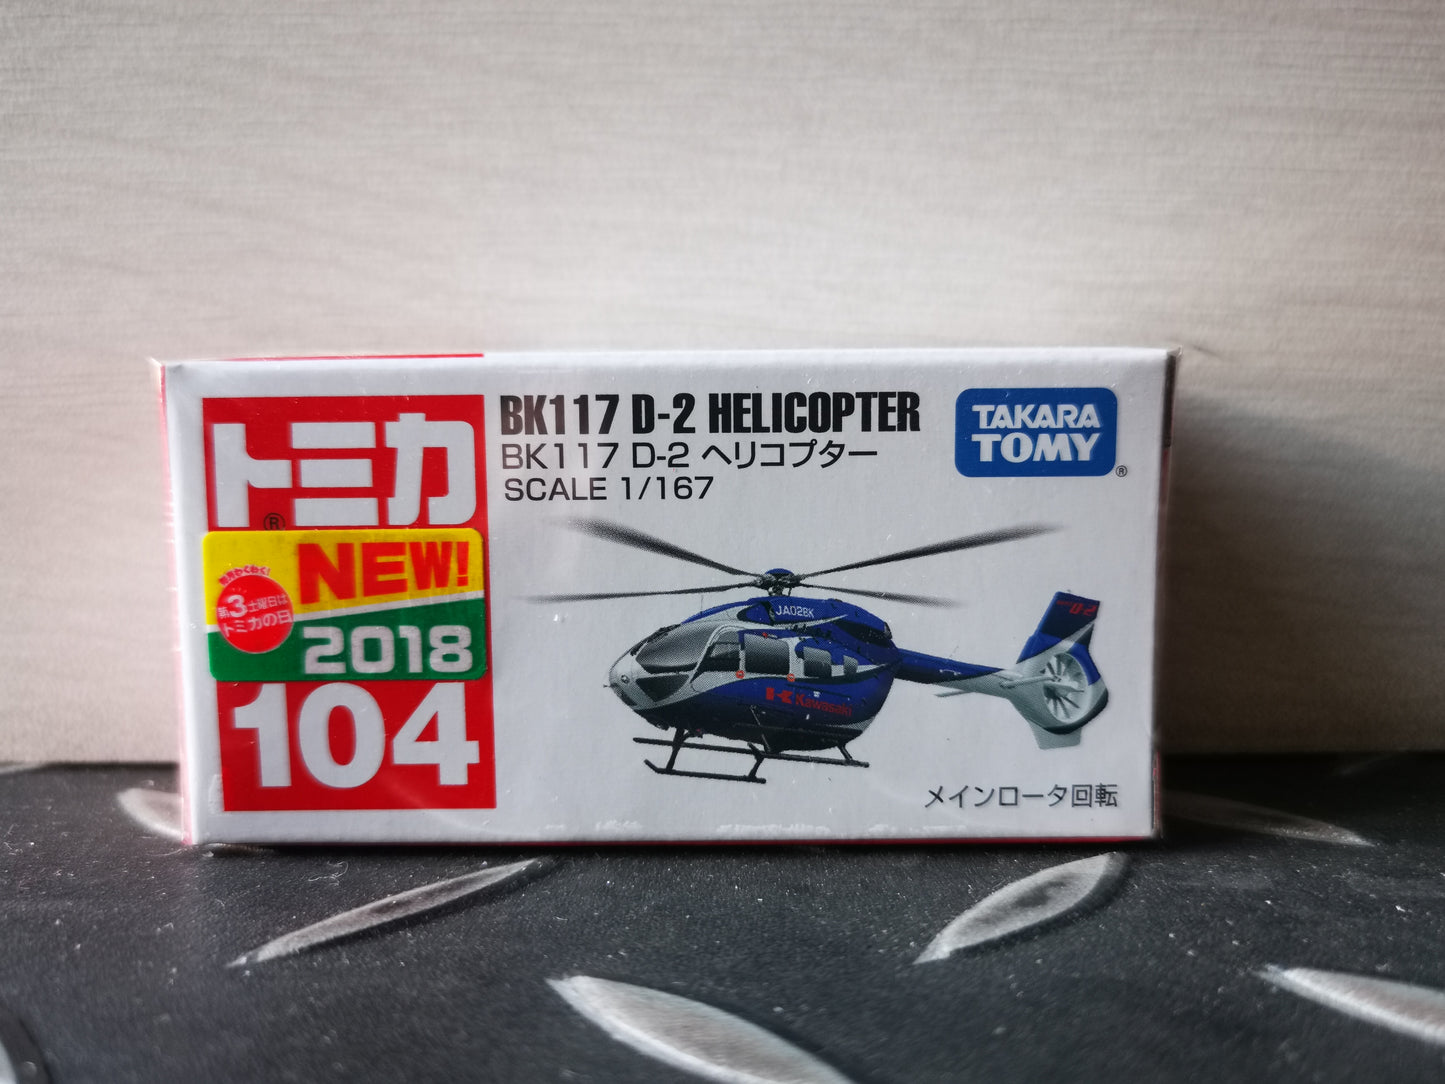 TOMICA #104 Kawasaki BK117-D-2 Helicopter